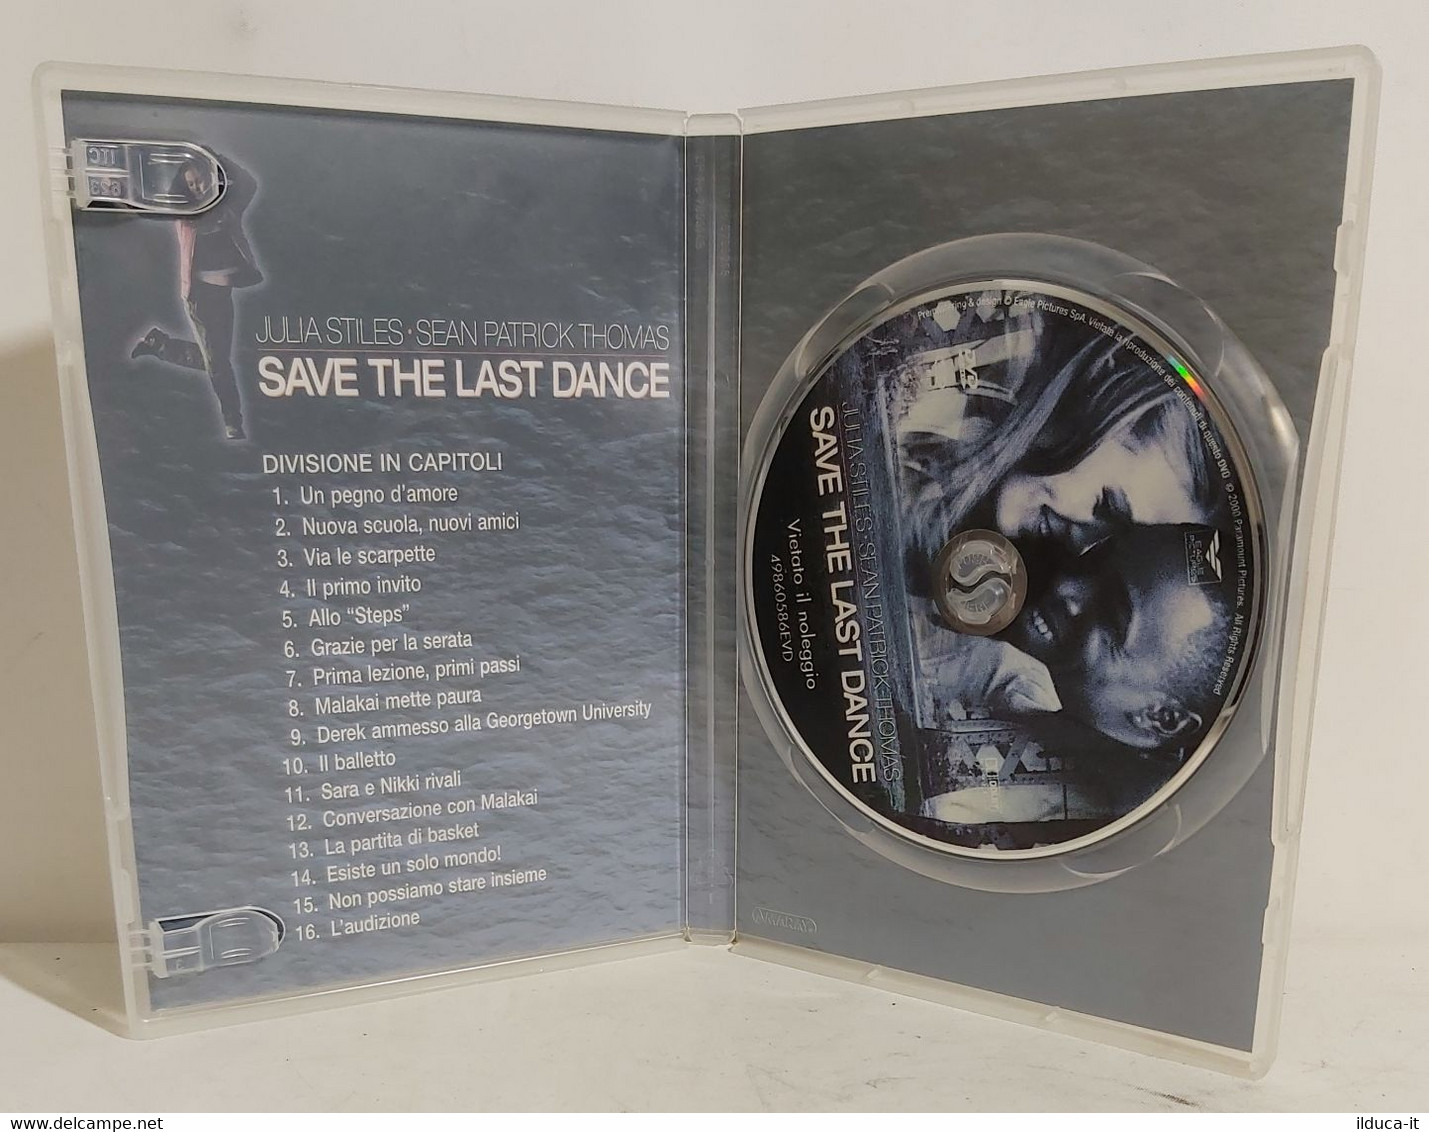 I101492 DVD - Save The Last Dance - Julia Stiles Sean Patrick Thomas - Romanticismo